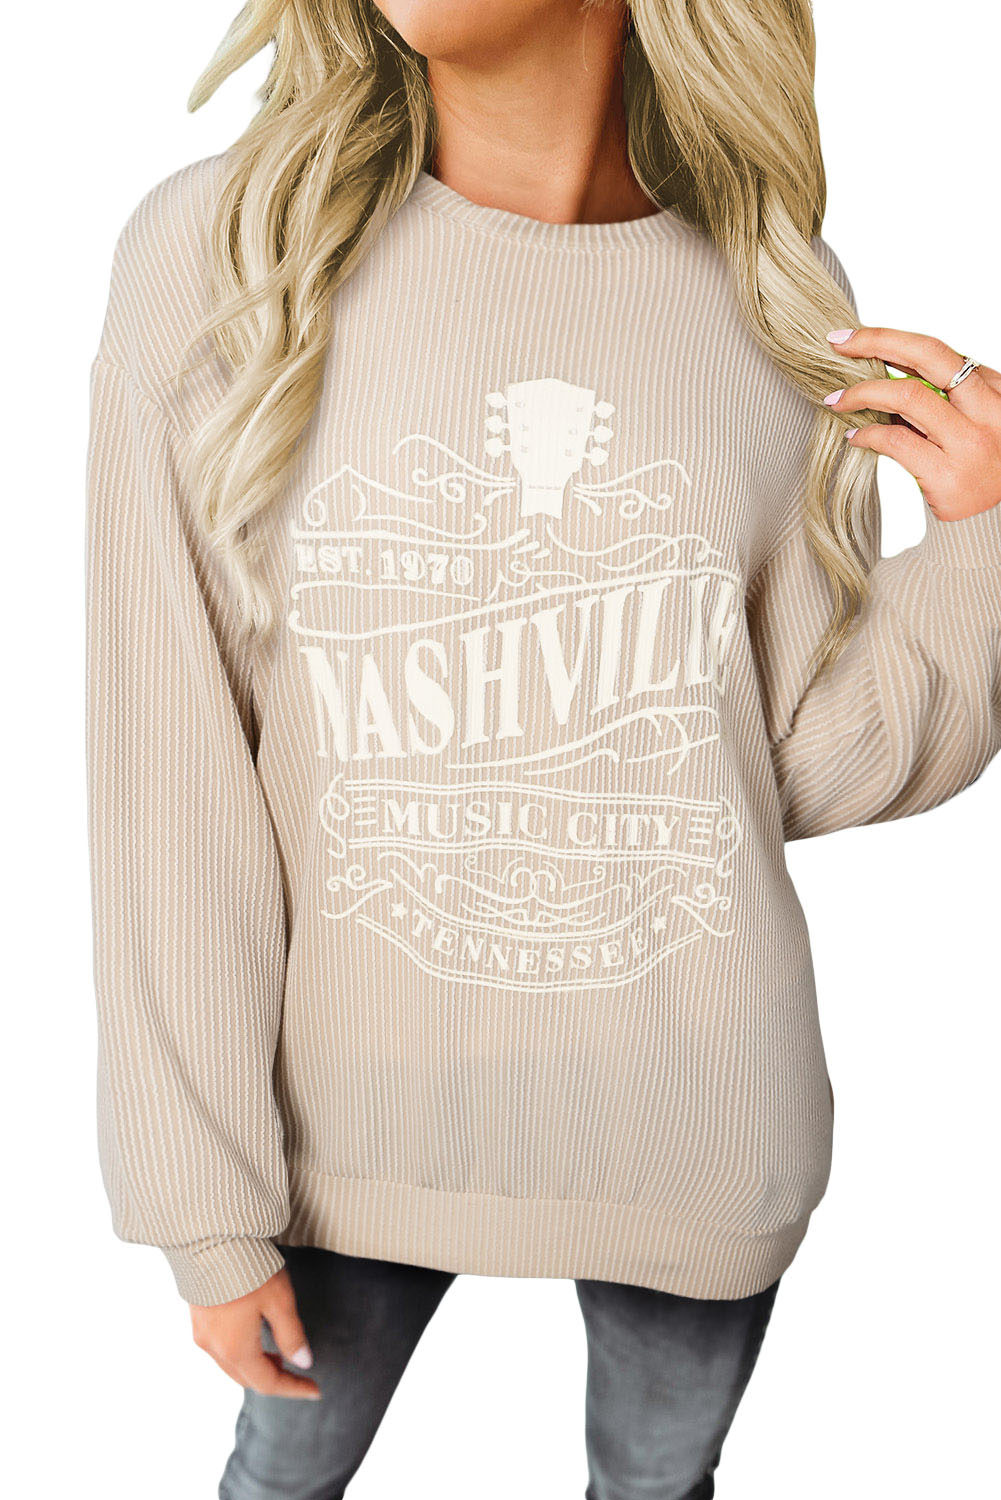 NASHVILLE MUSIC CITY Corded Graphic Sweatshirt